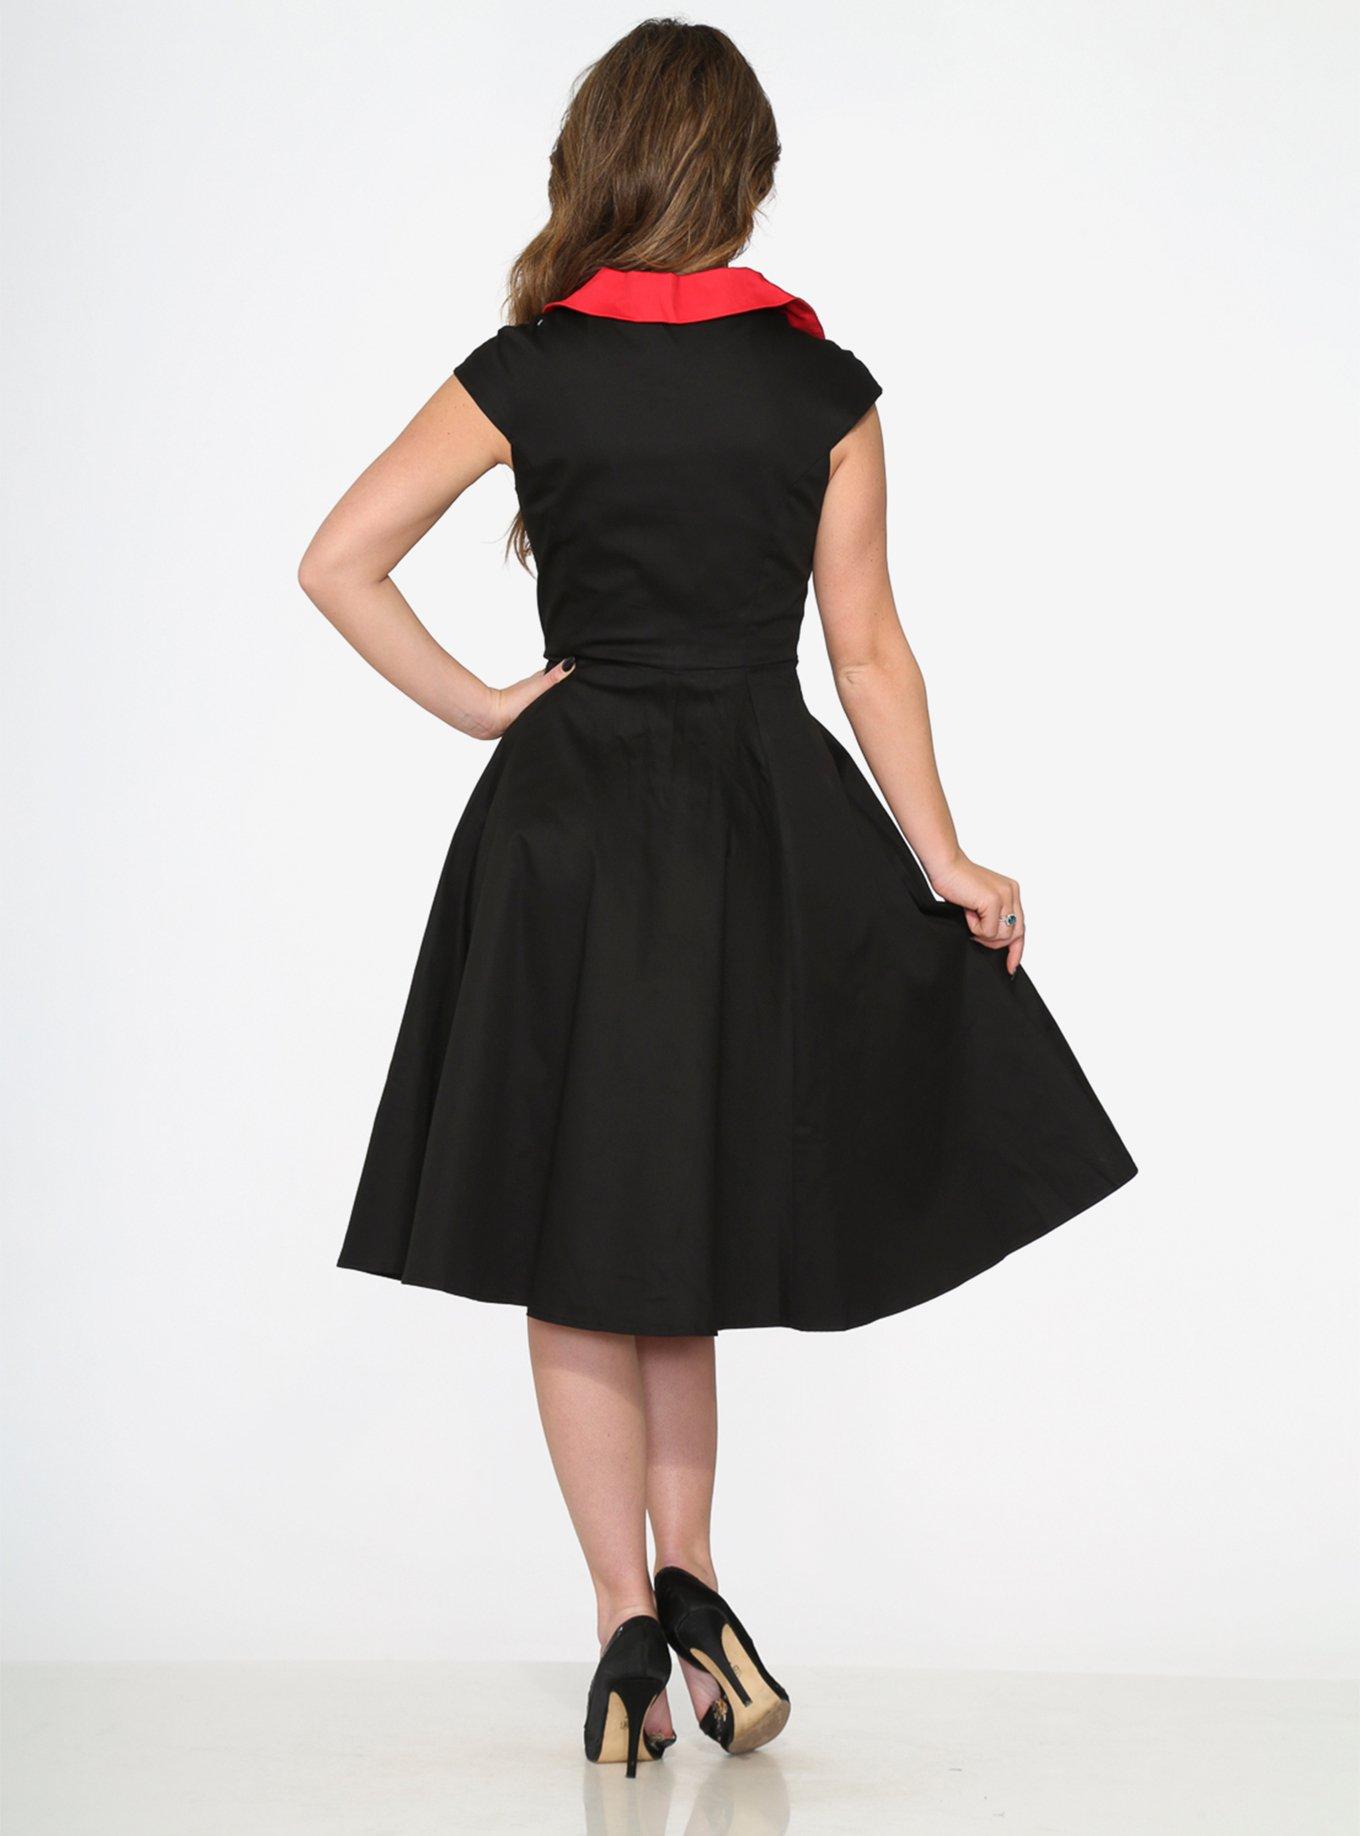 Black Dress with Red Trim, BLACK, alternate